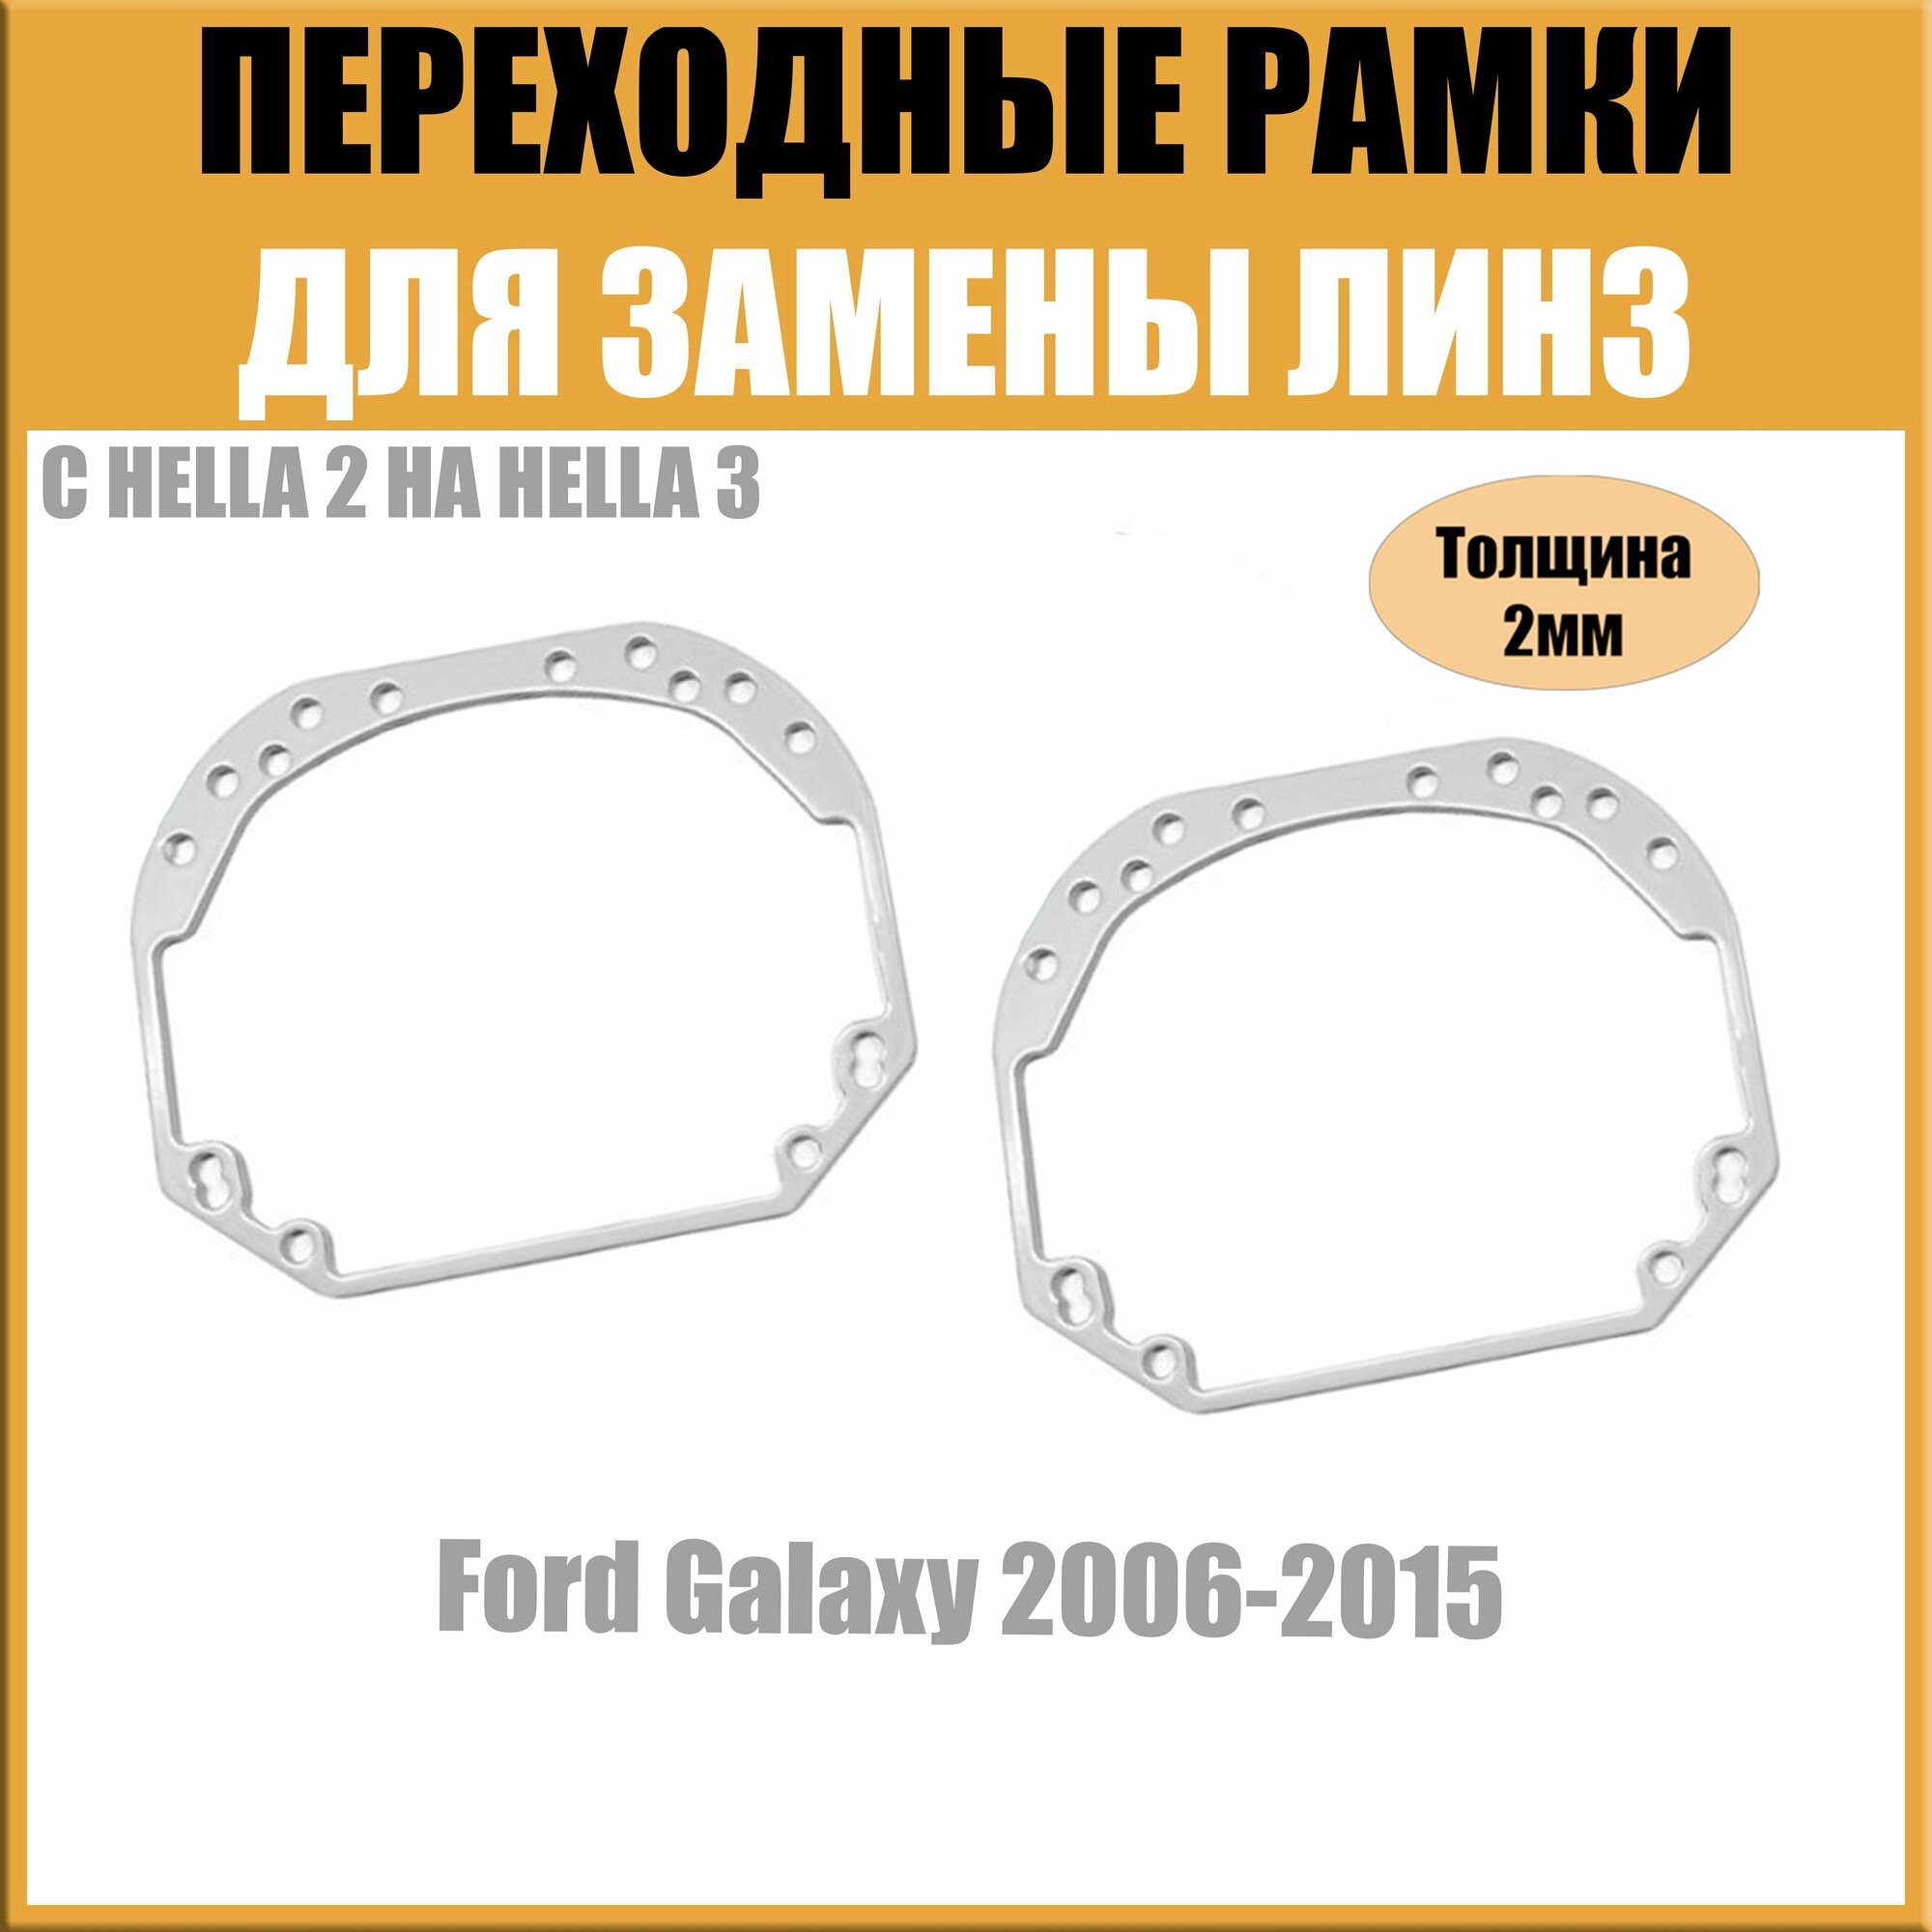 Переходные рамки для линз №1 на Ford Galaxy 2006-2015 под модуль Hella 3R/Hella 3 (Комплект, 2шт)